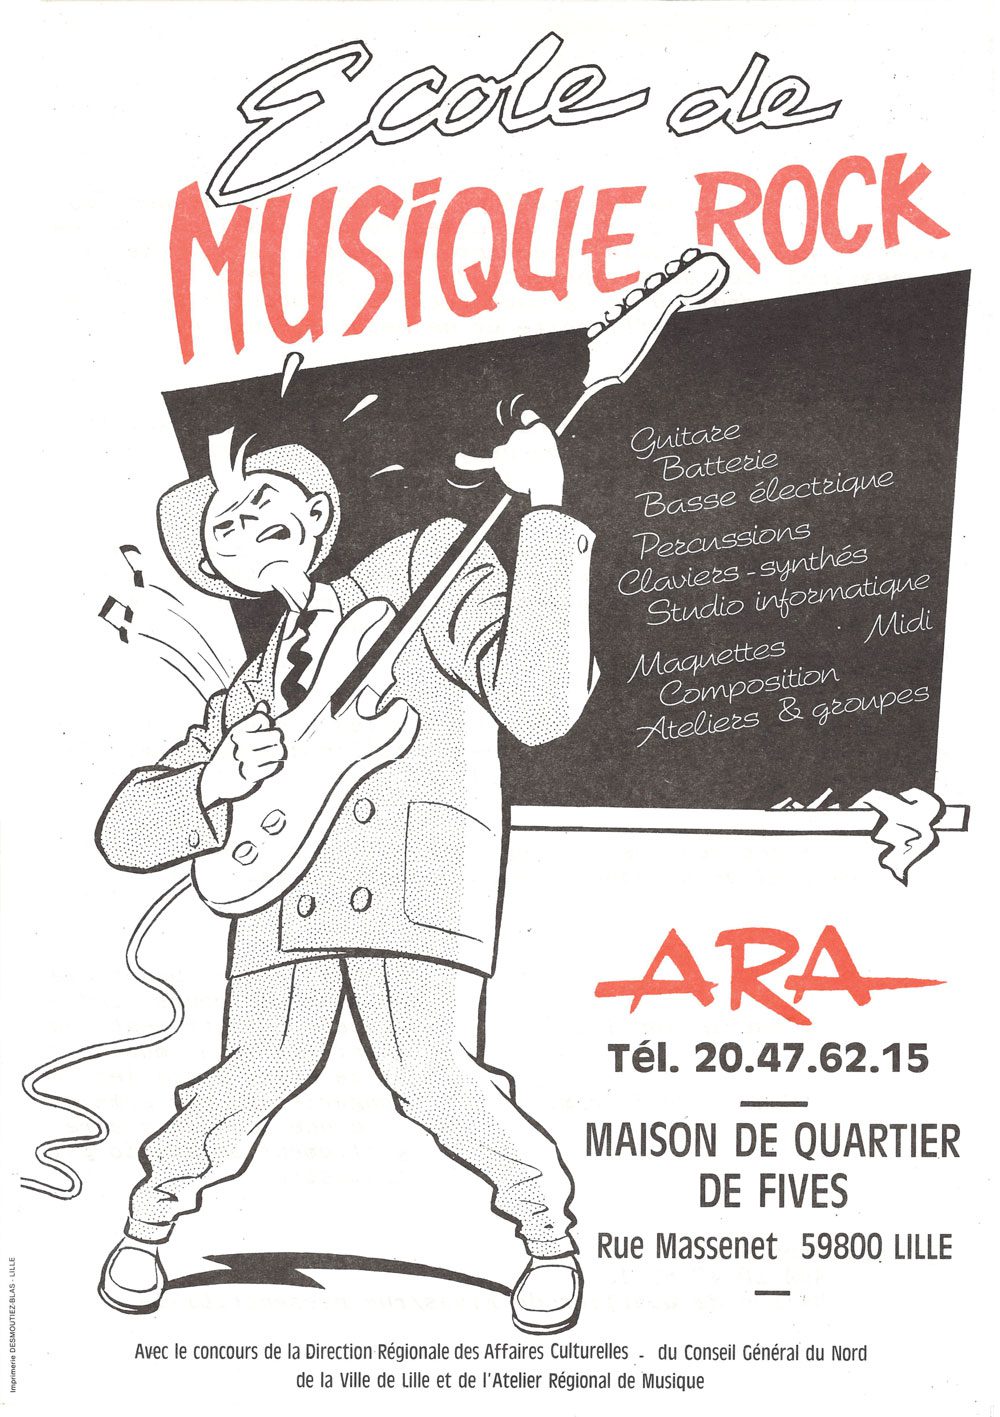 Flyer ARA Ecole de musique rock